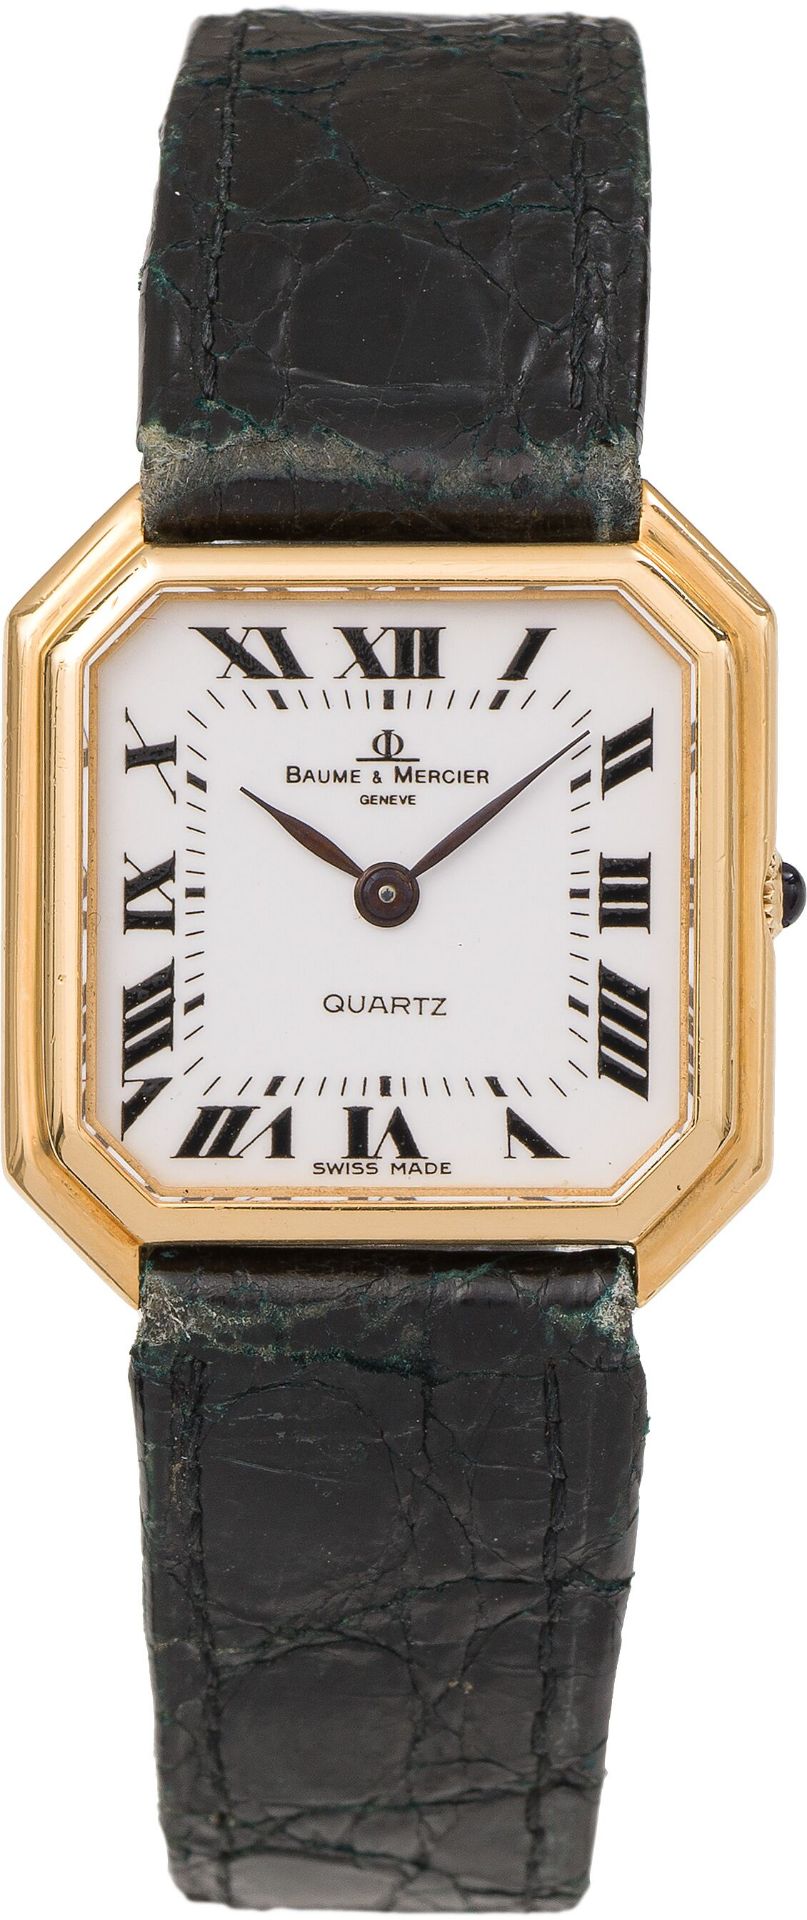 Baume & MercierMen's watchc. 1980; reference no. "482560"18k gold, sapphire, leather; sapphire